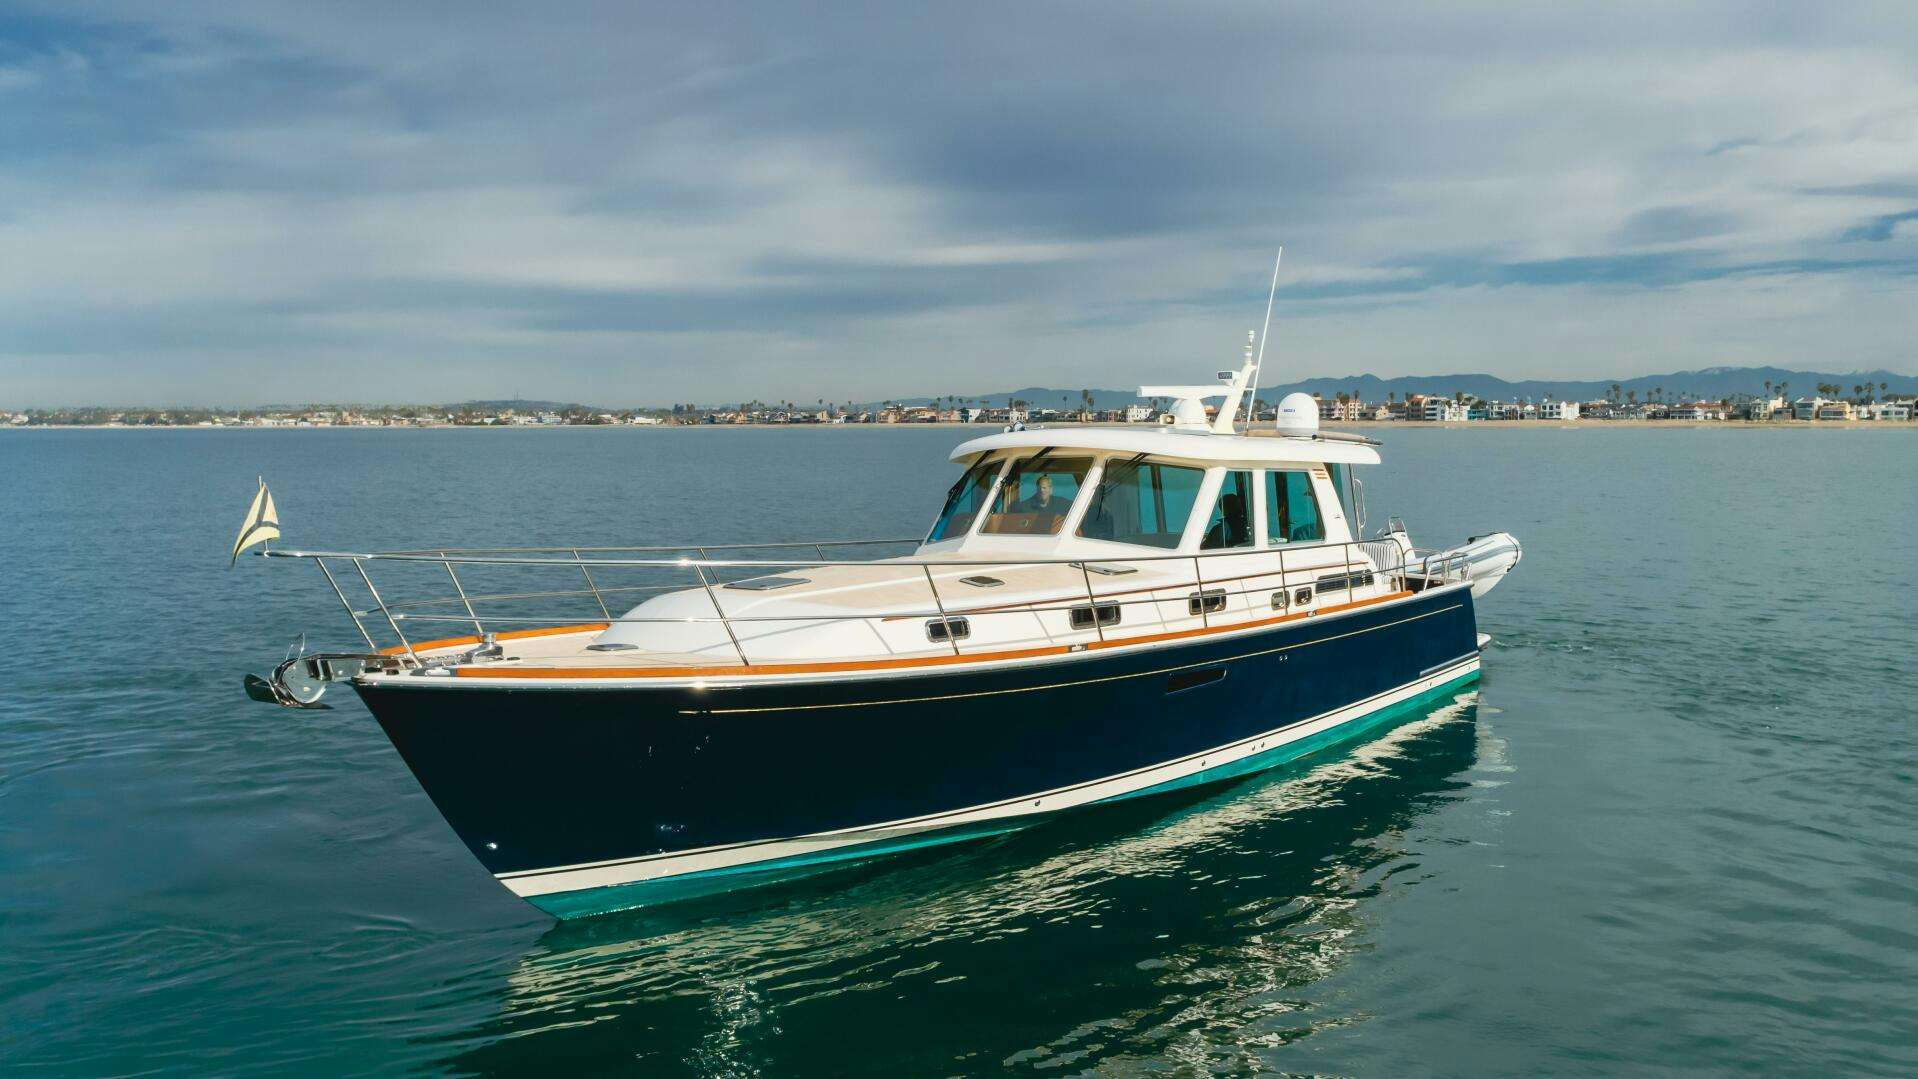 N' joyn' life
Yacht for Sale